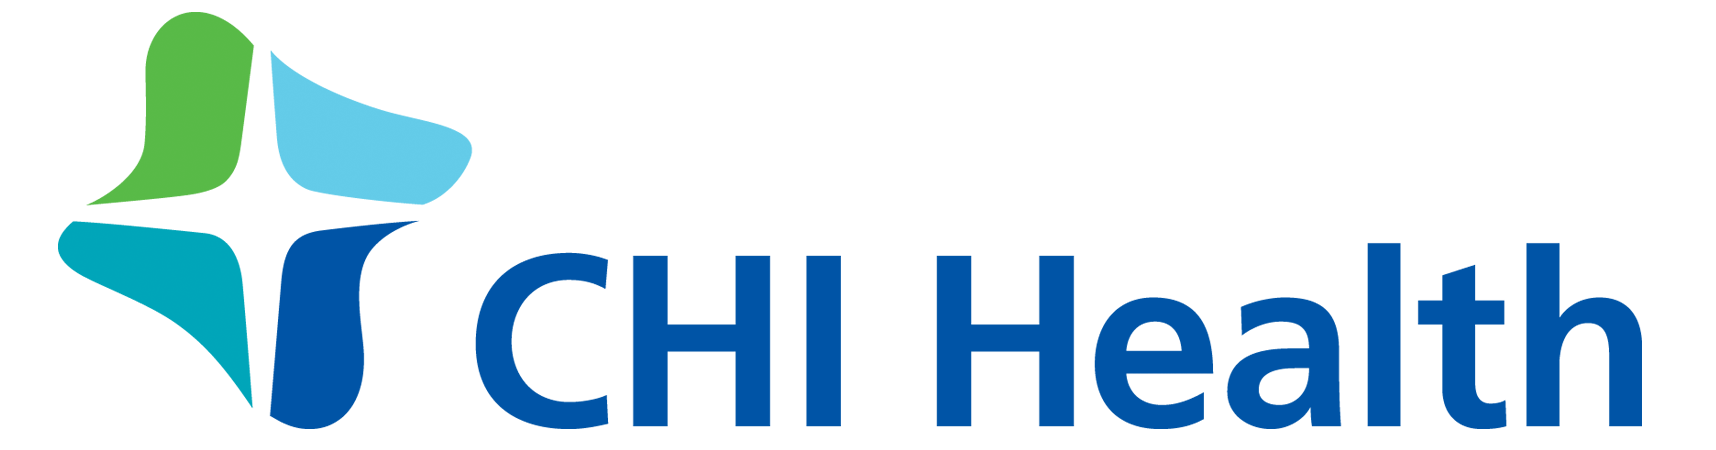 CHI Health logo